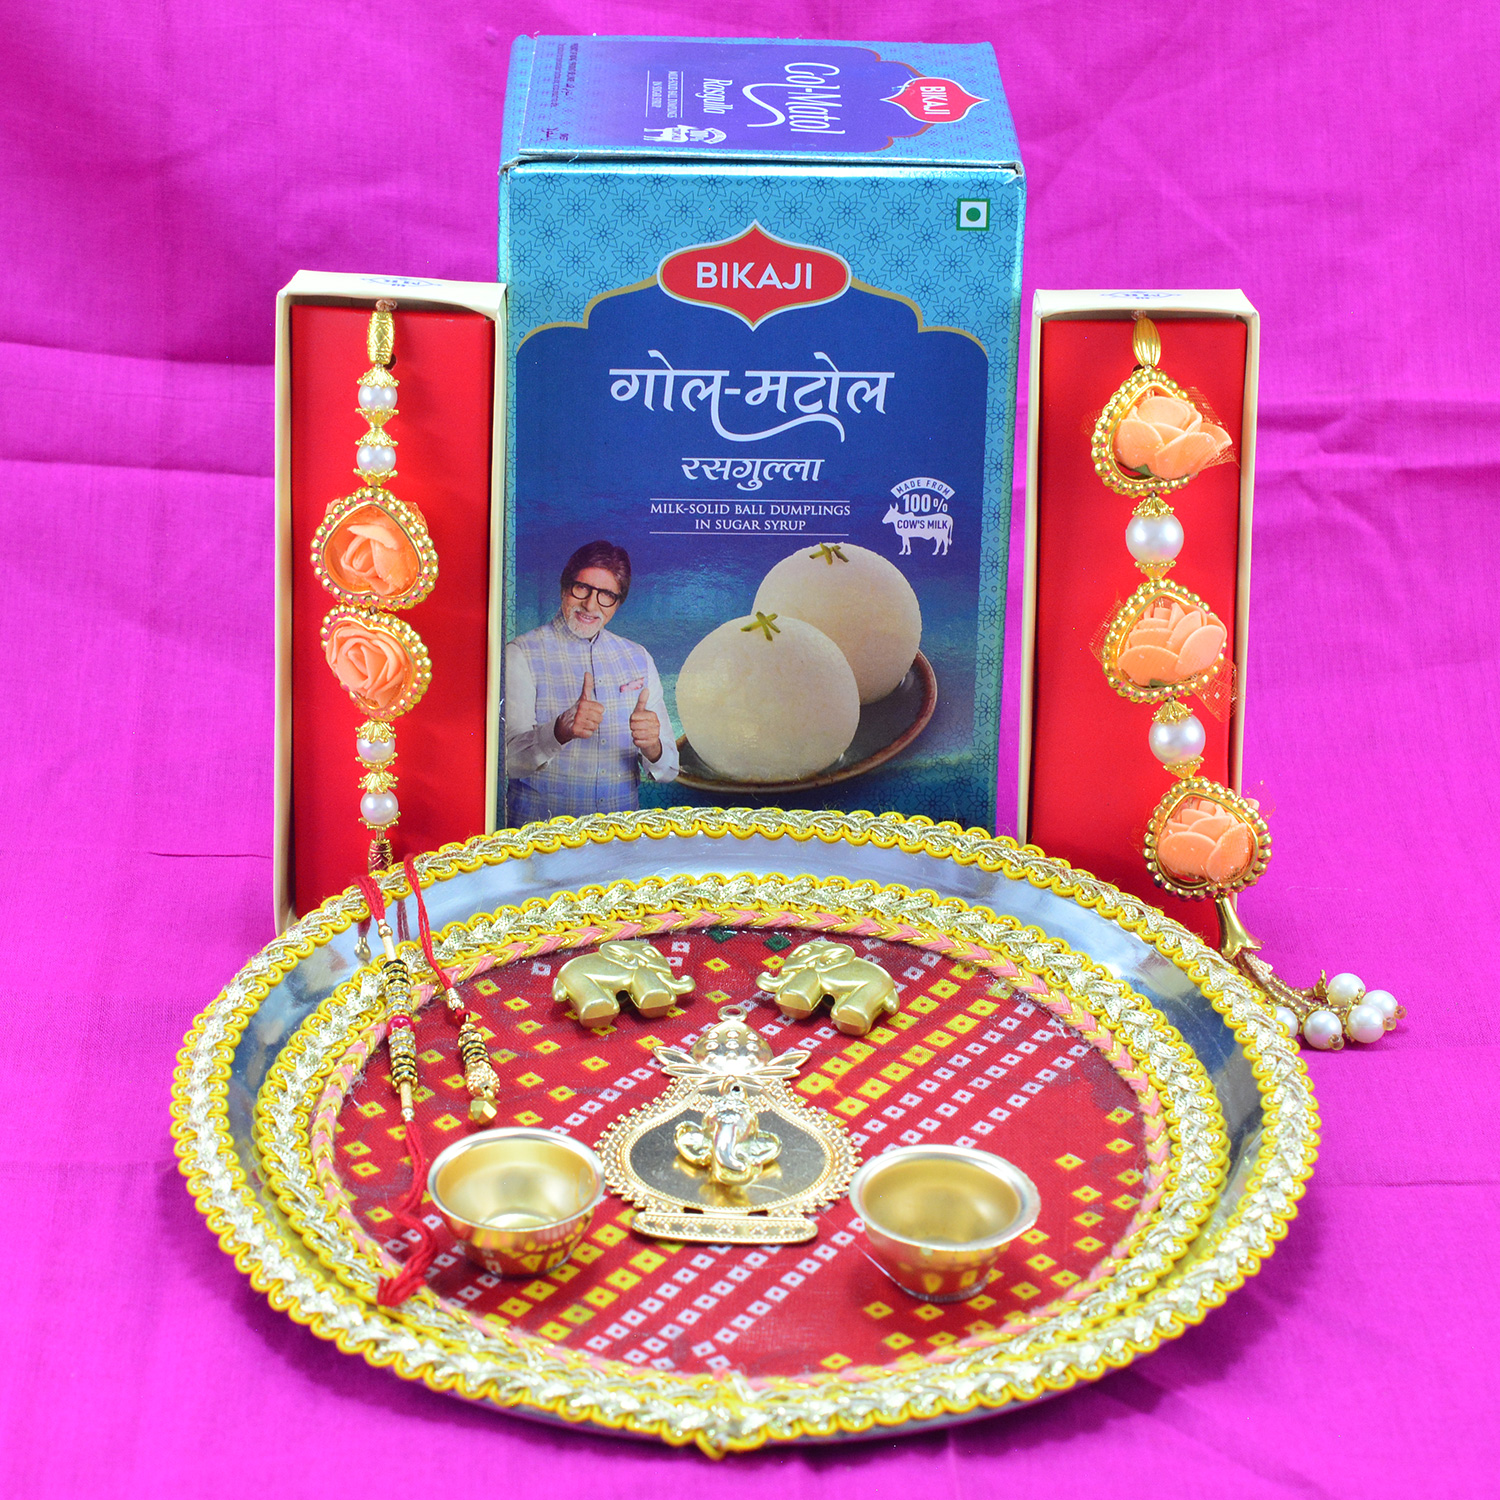 Bikaji Rasgulla Sweets with Auspicious Magnificent Ganesha Rakhi Pooja Thali Hamper